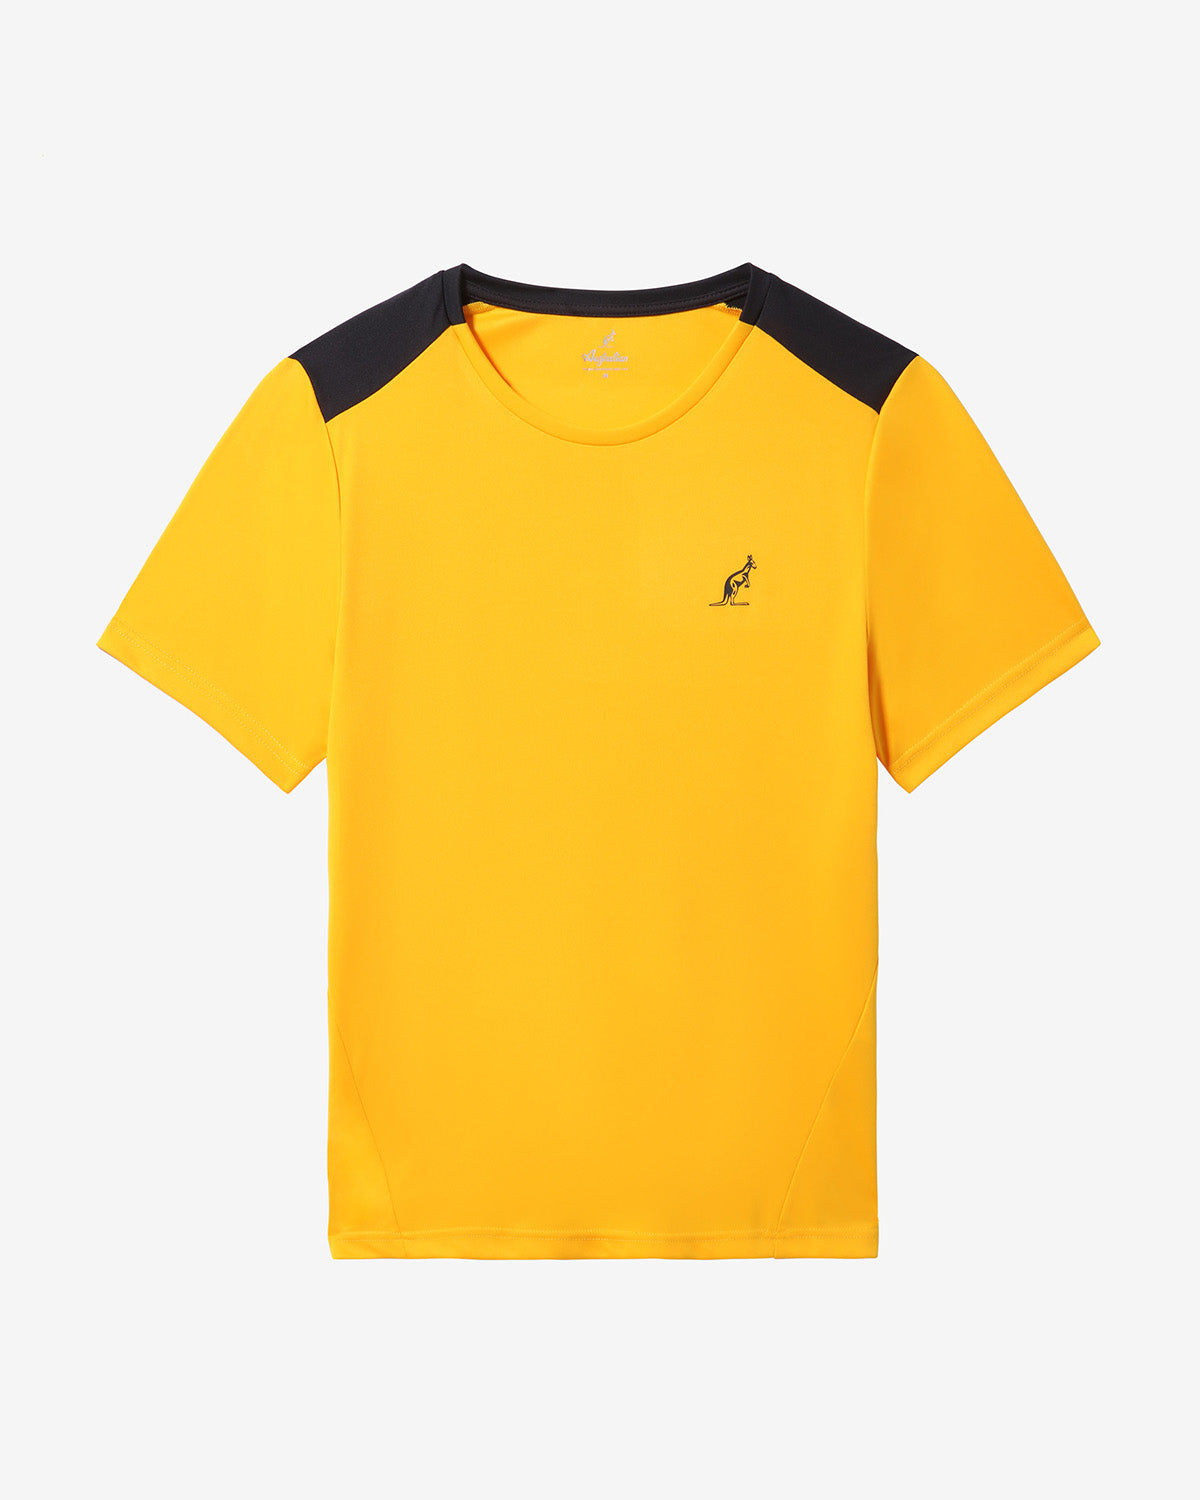 Energy T-shirt: Australian Tennis 